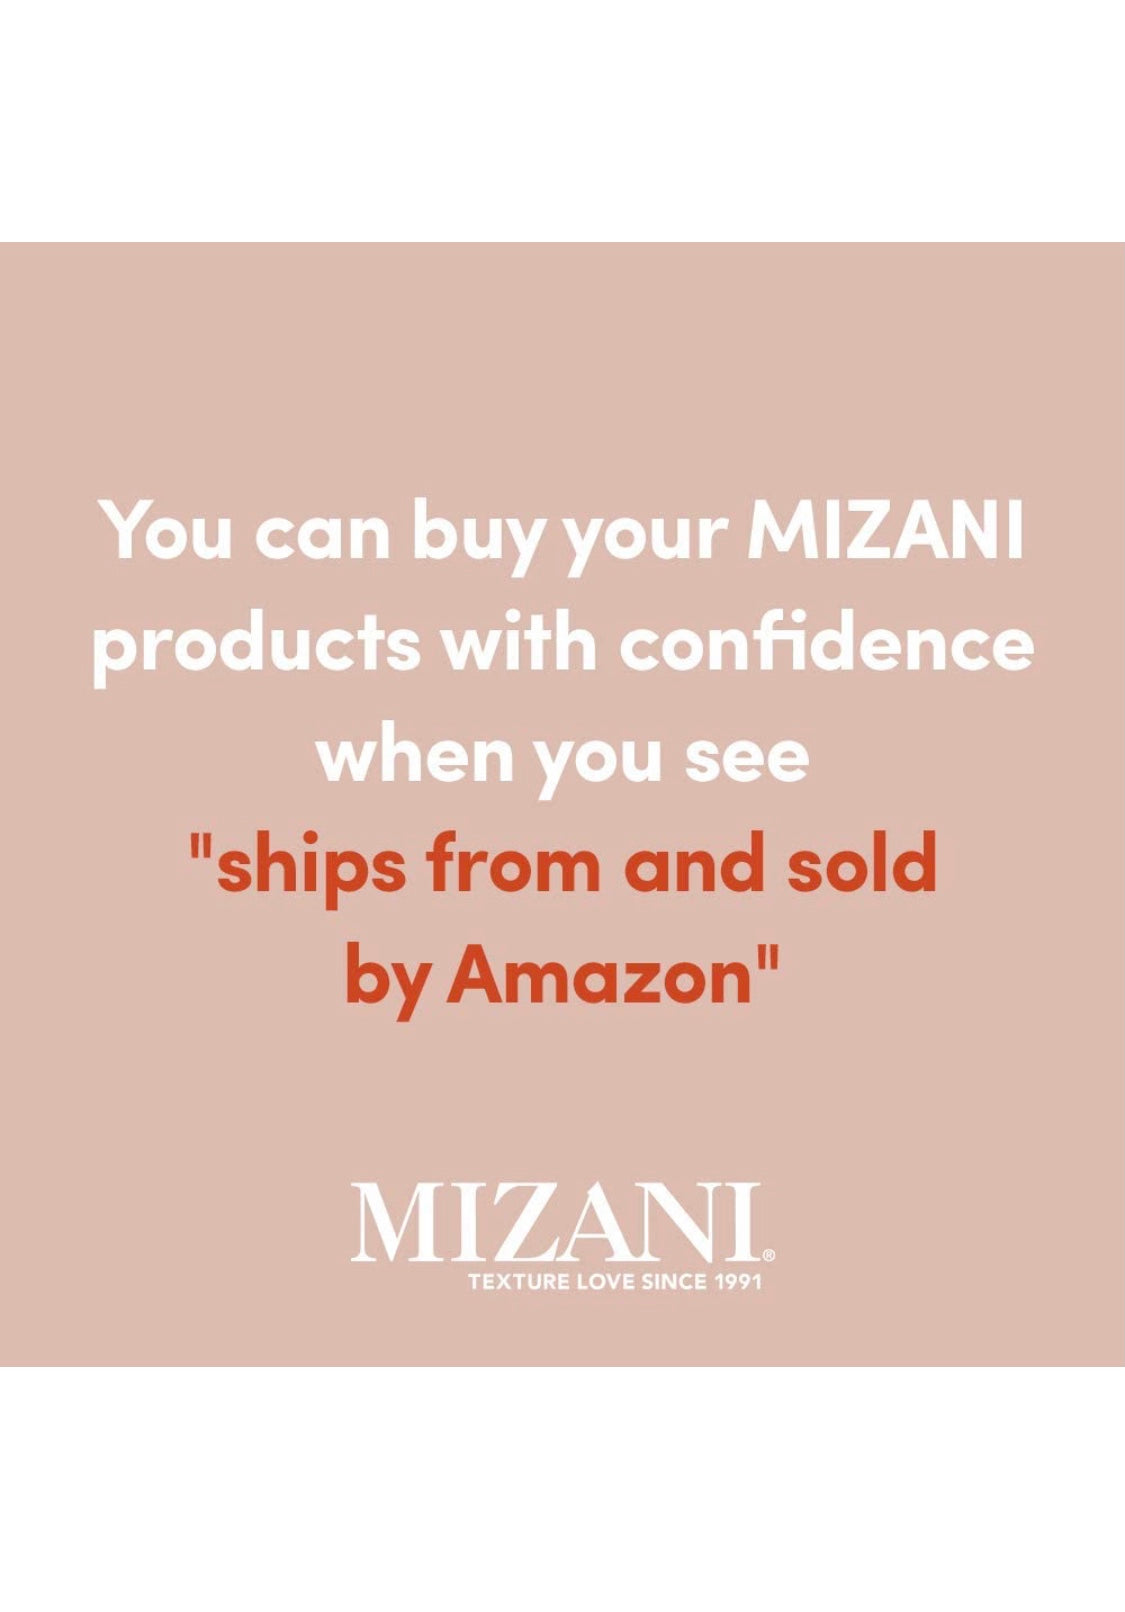 Mizani - 25 miracle nourishing oil 4.2 fl. oz./ 125 ml